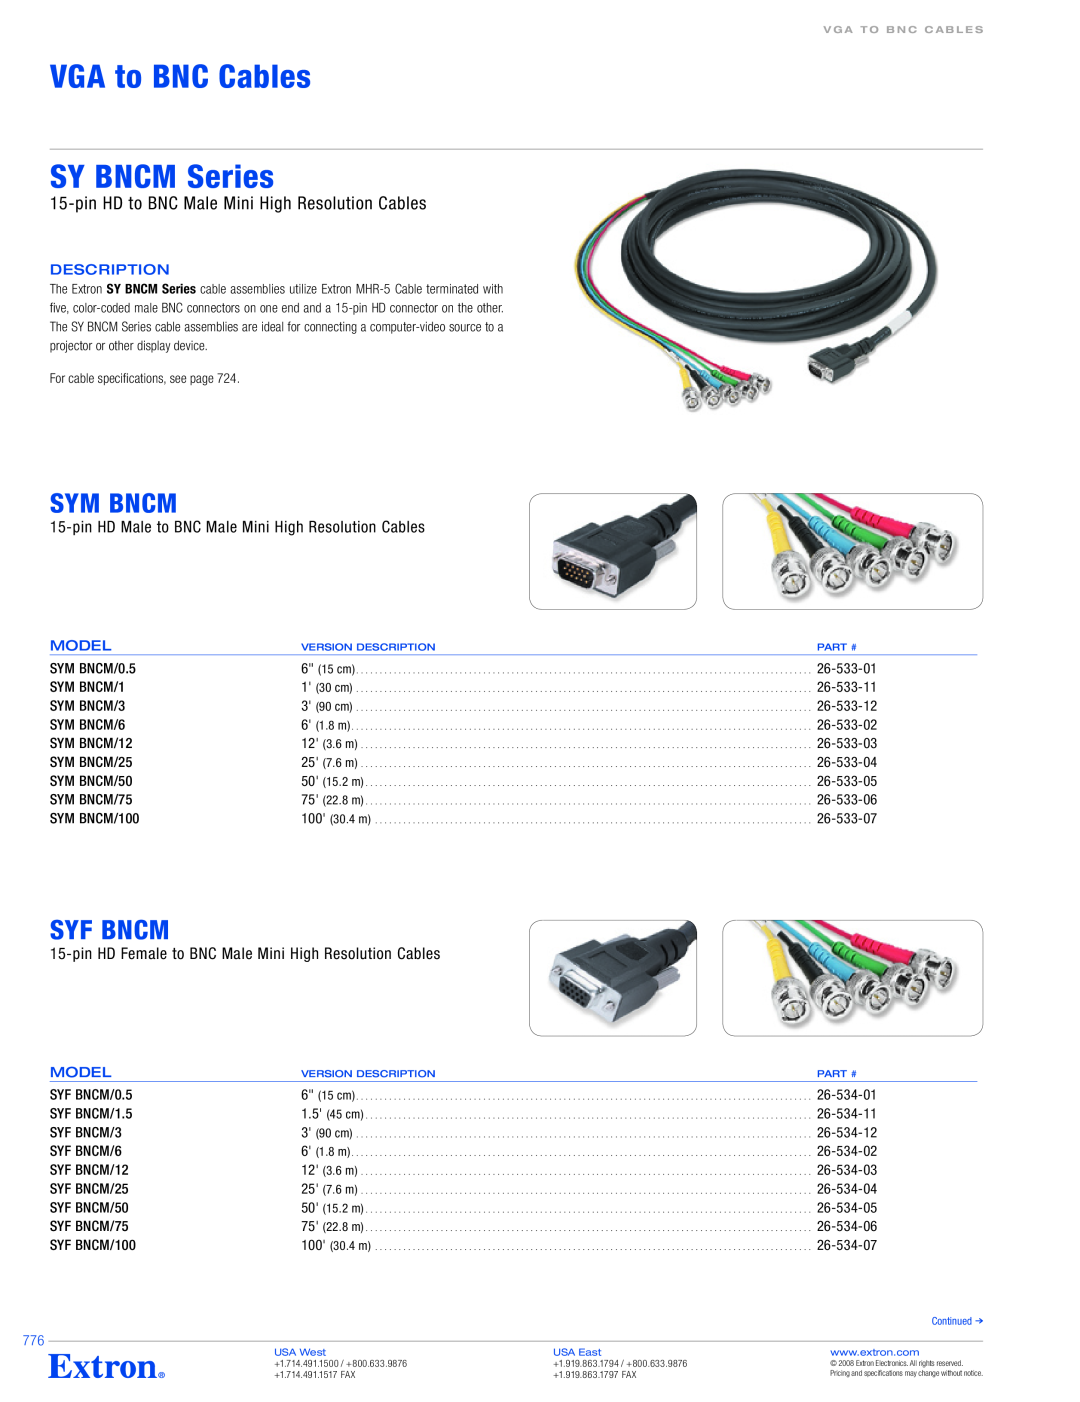 Extron electronic specifications VGA to BNC Cables SY BNCM Series, Sym Bncm, Syf Bncm 